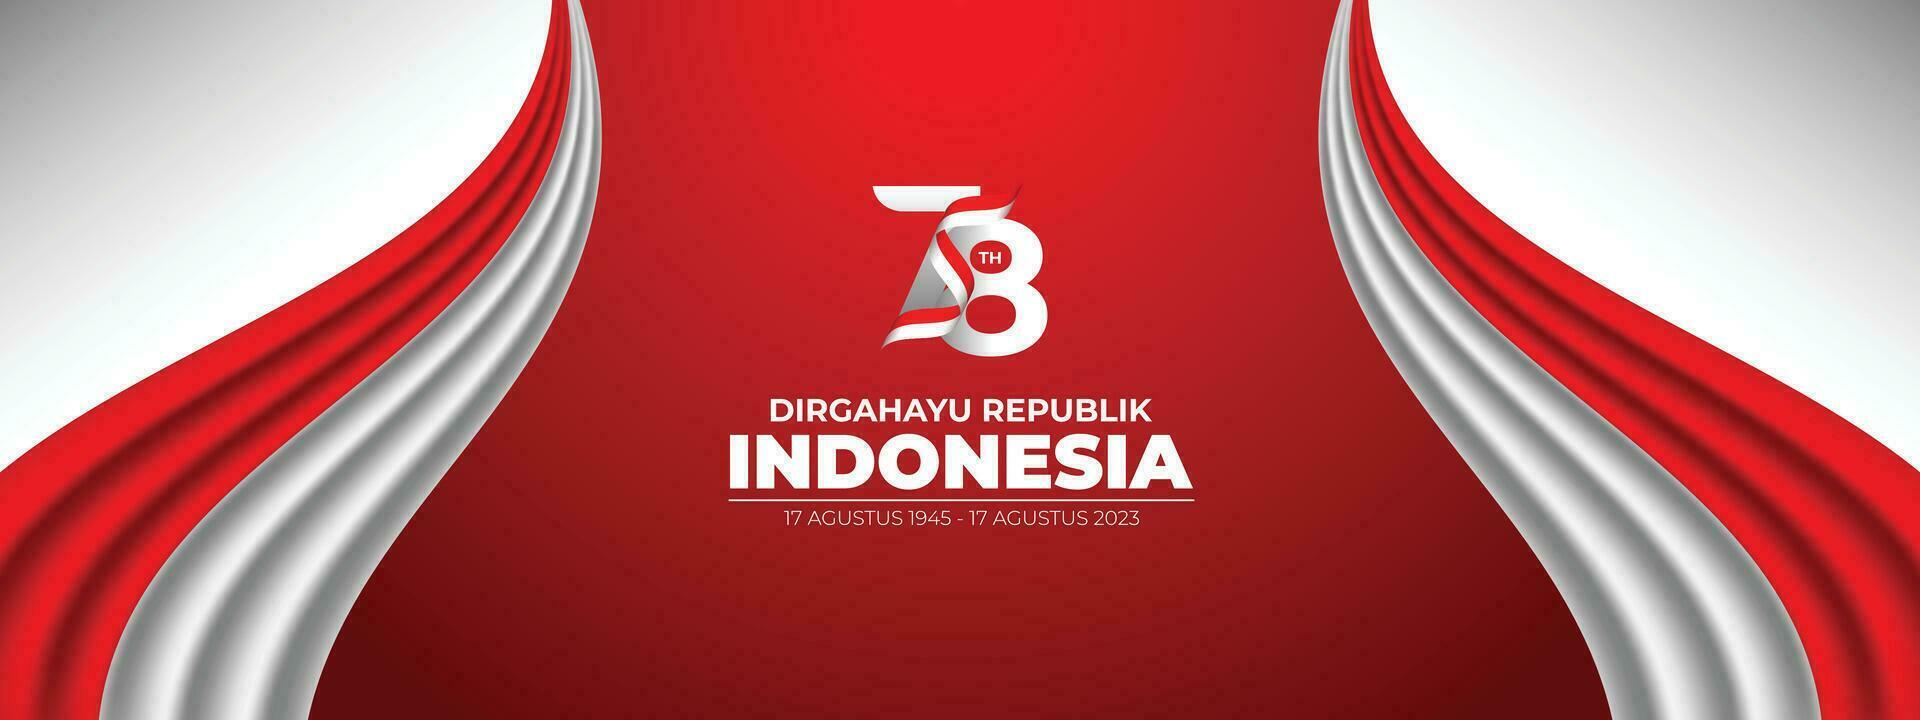 Dirgahayu Republik Indonesia Banner With Flag vector